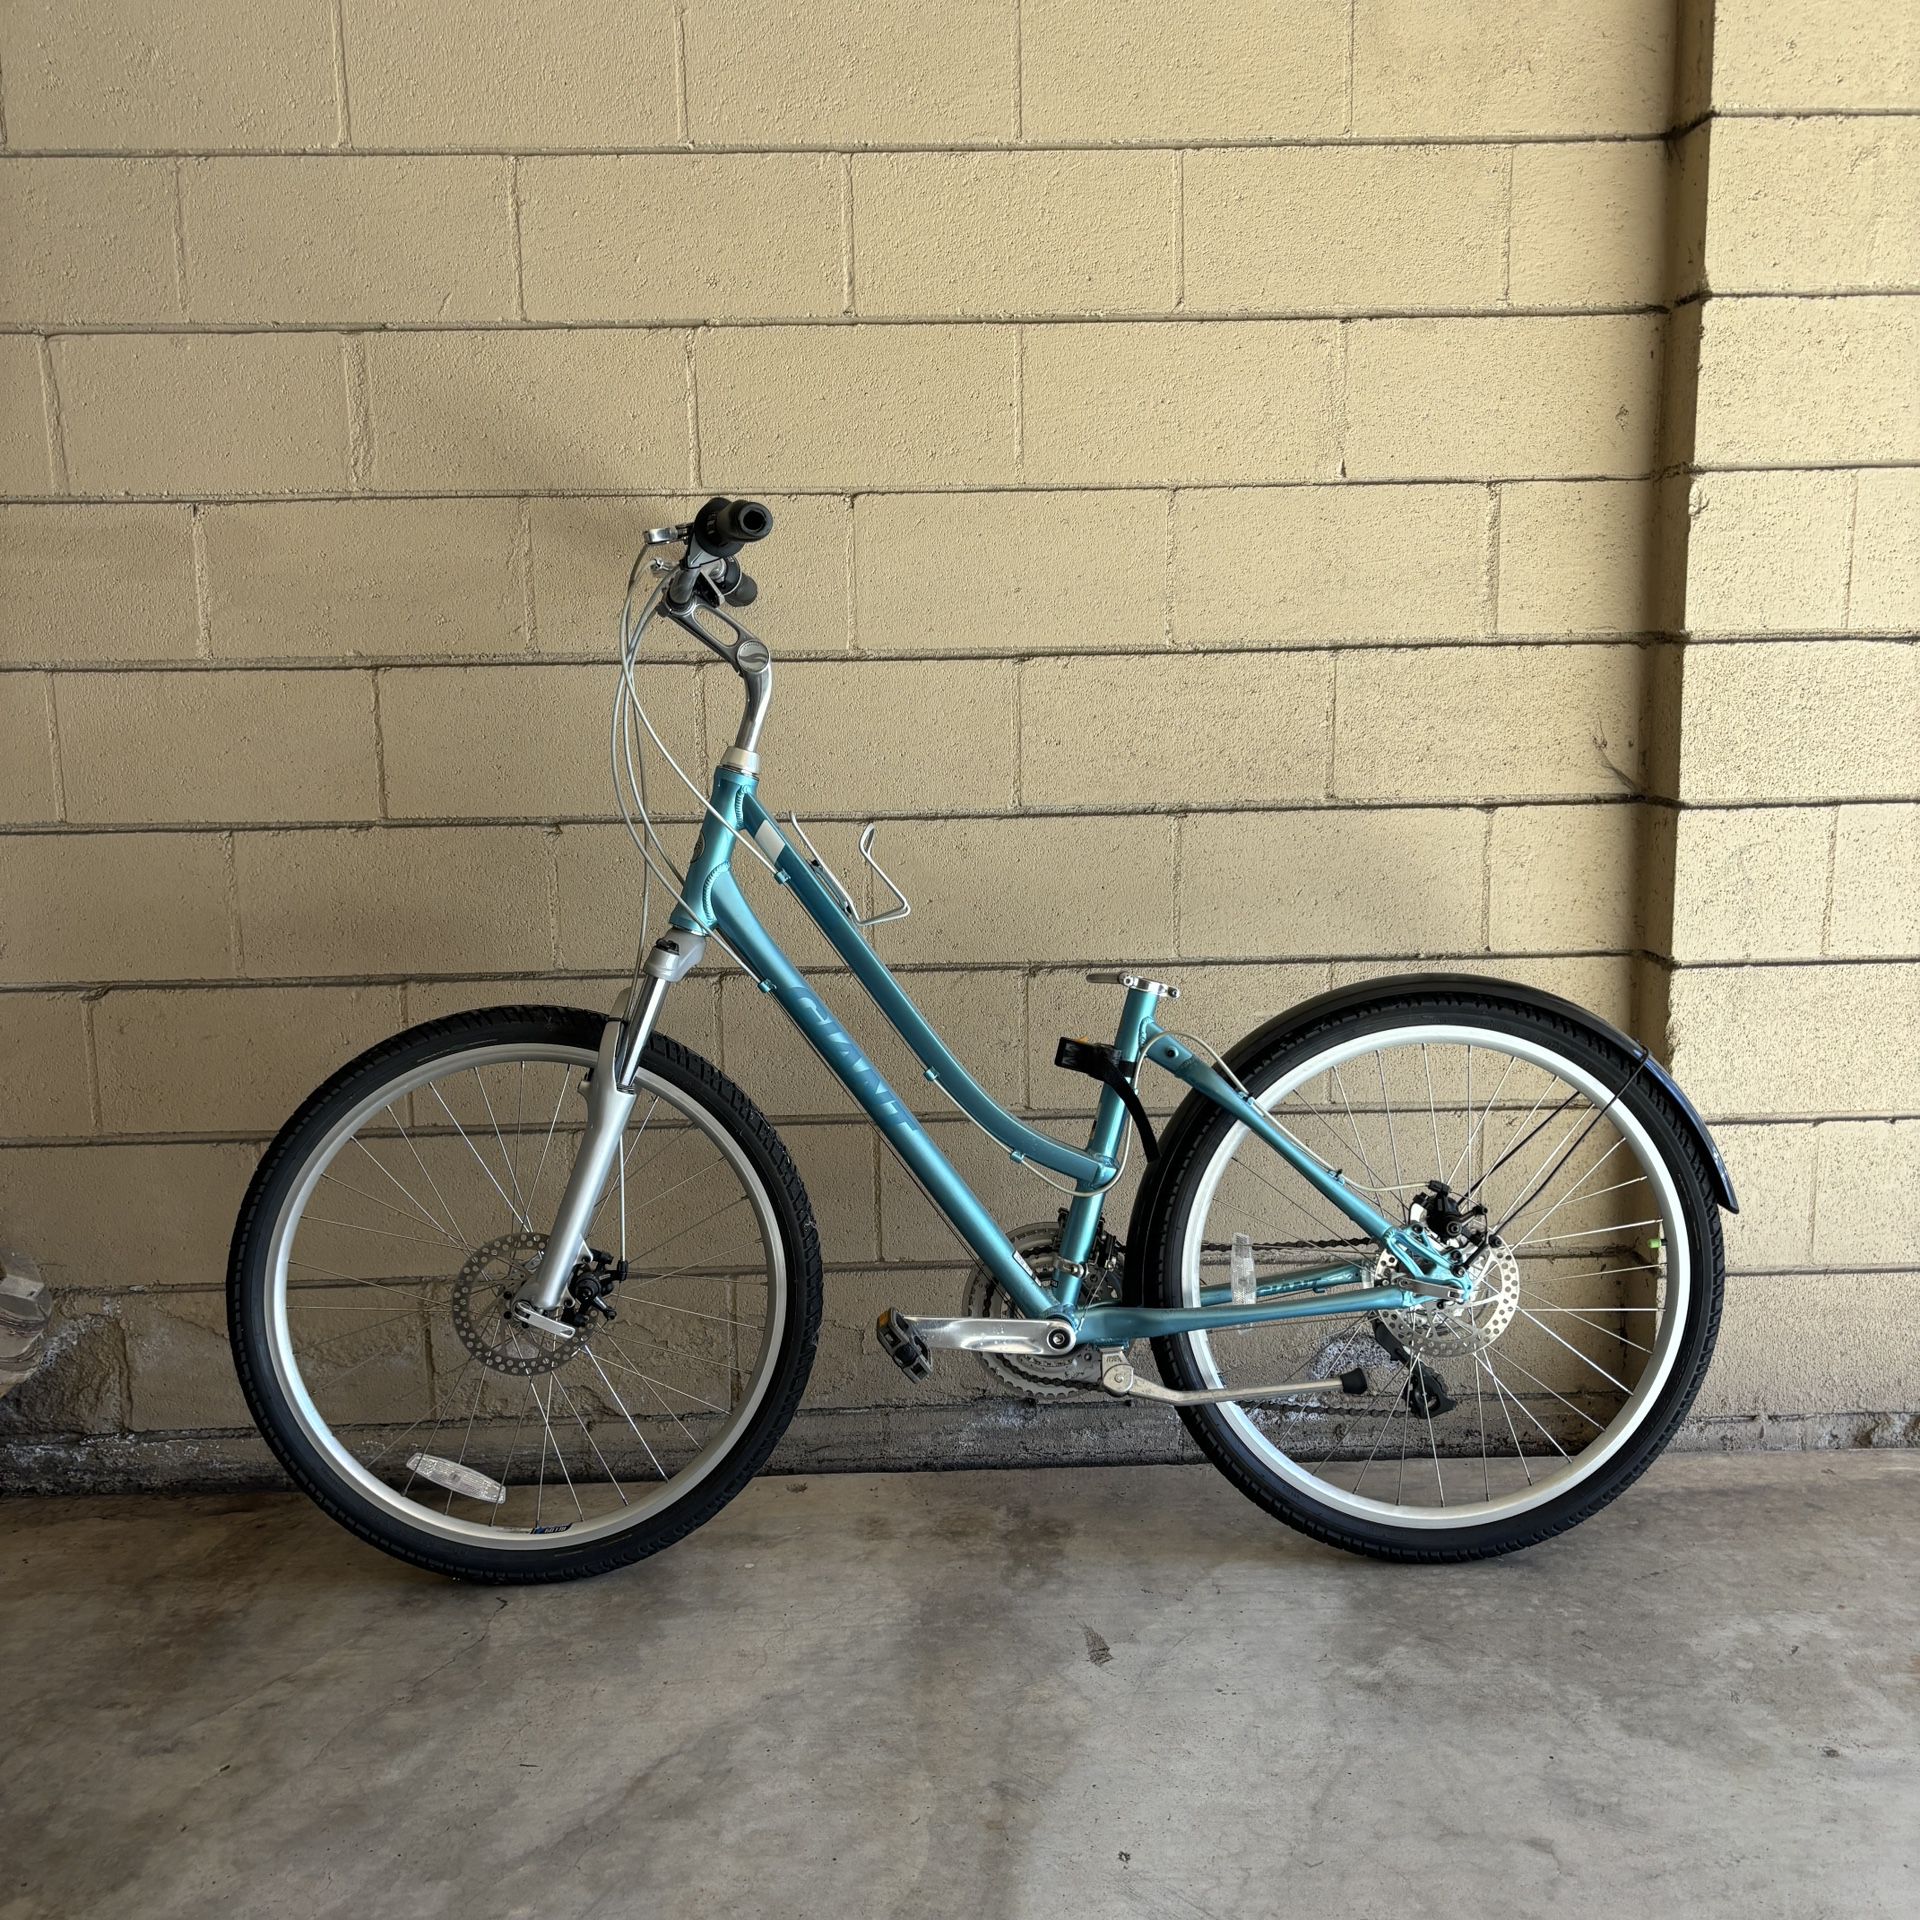 Giant Sedona DX Bike Bicycle For Ladies Women’s